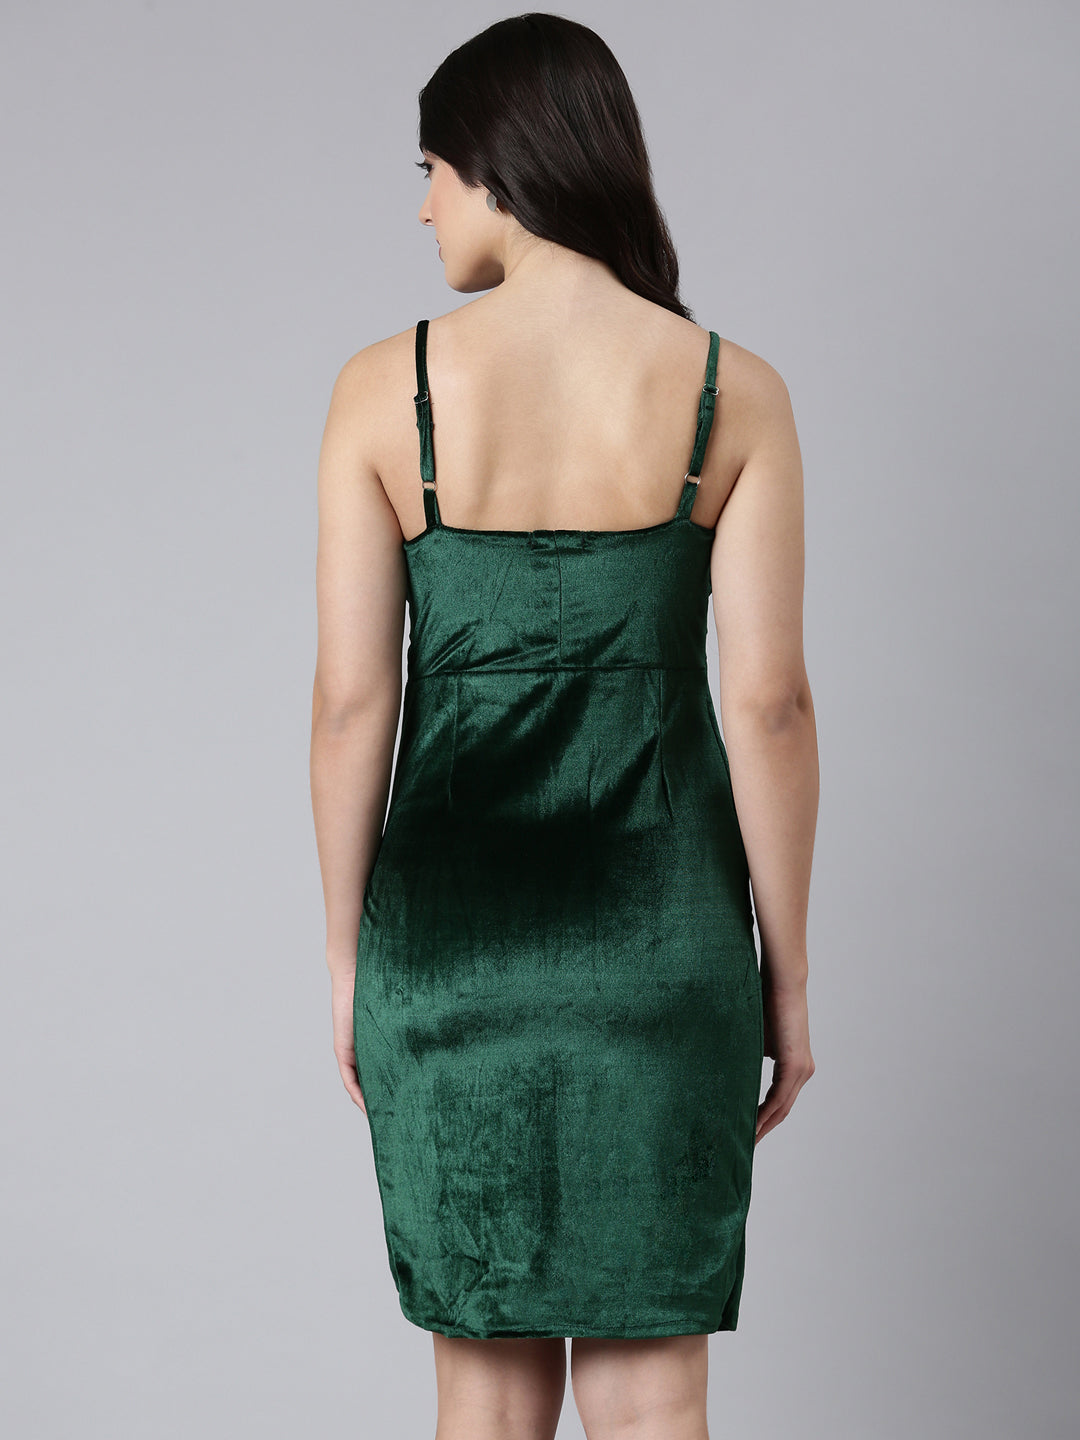 Women Bodycon Solid Green Dress